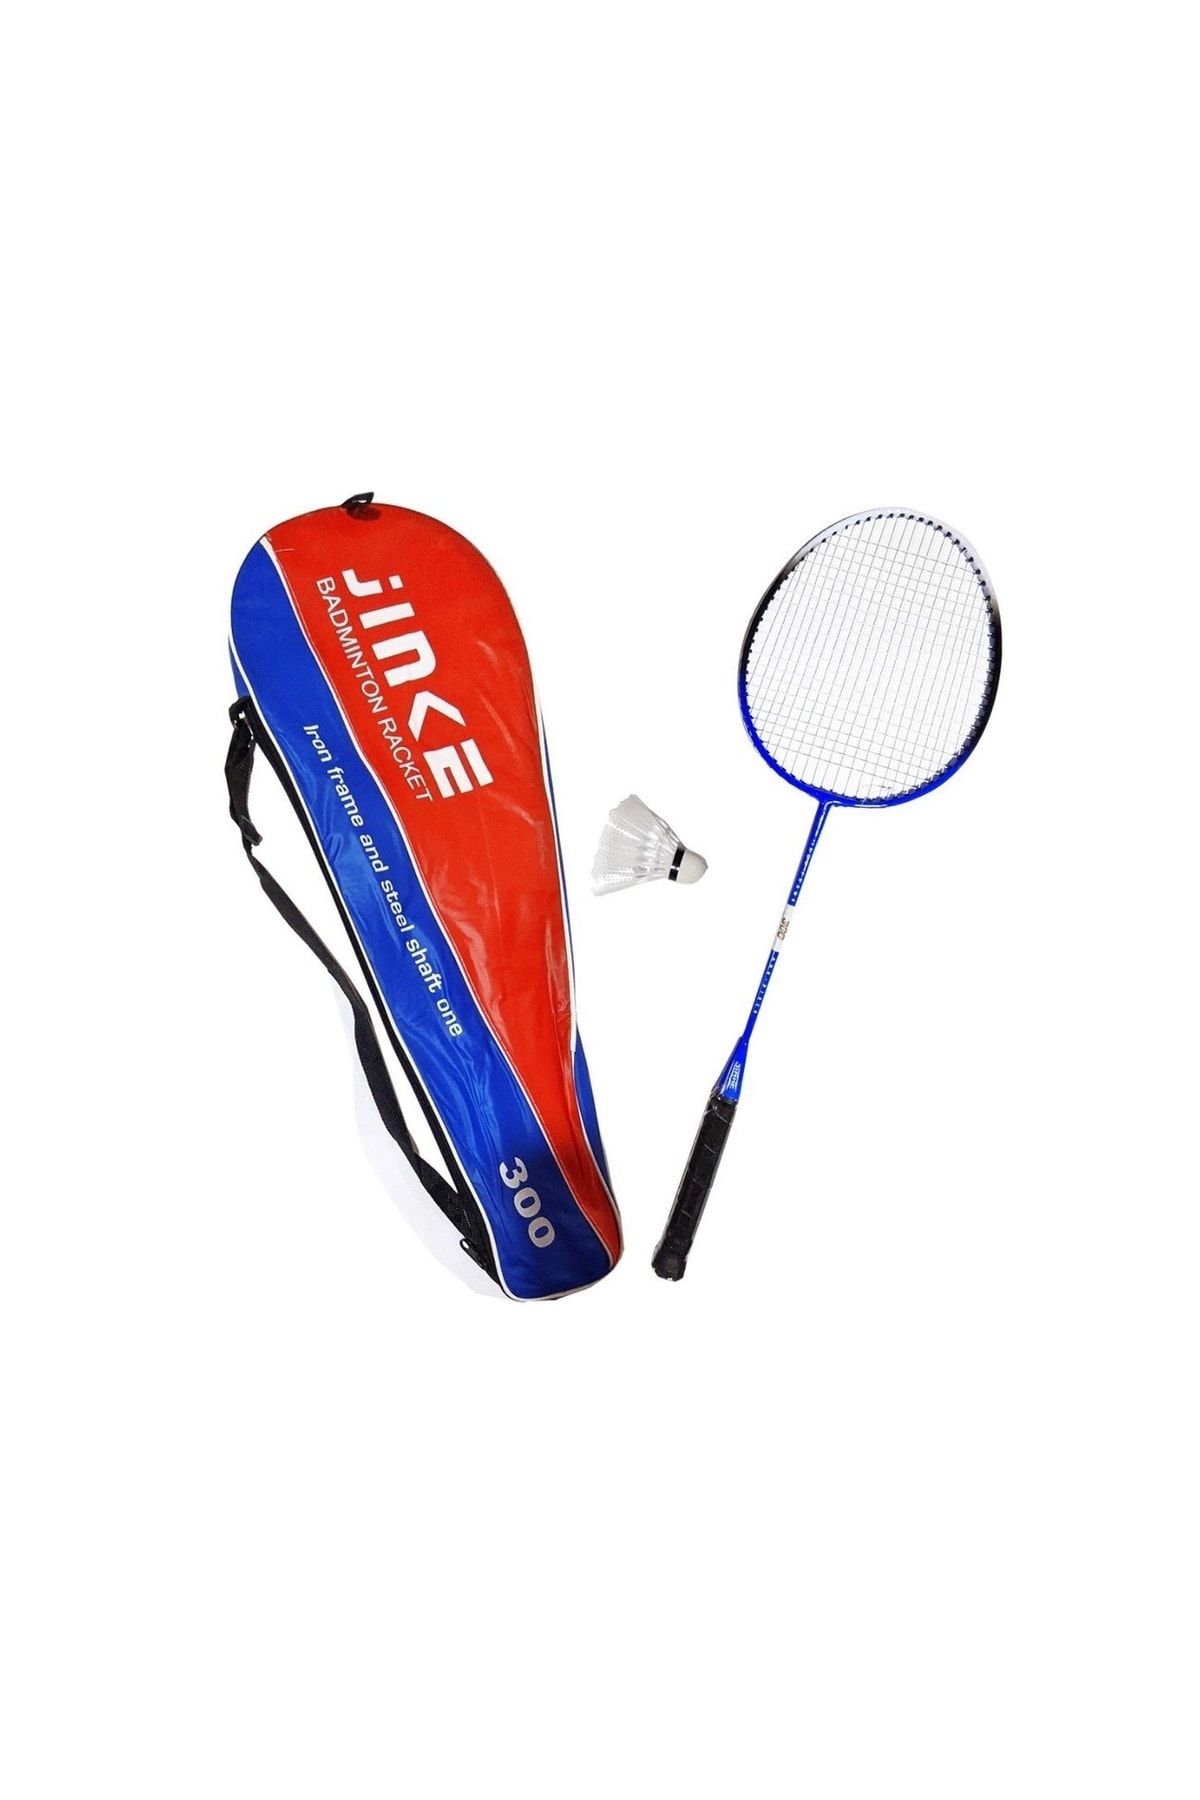 ÖZBEK Badminton Raketi Çantalı 2 Raket 1 Top